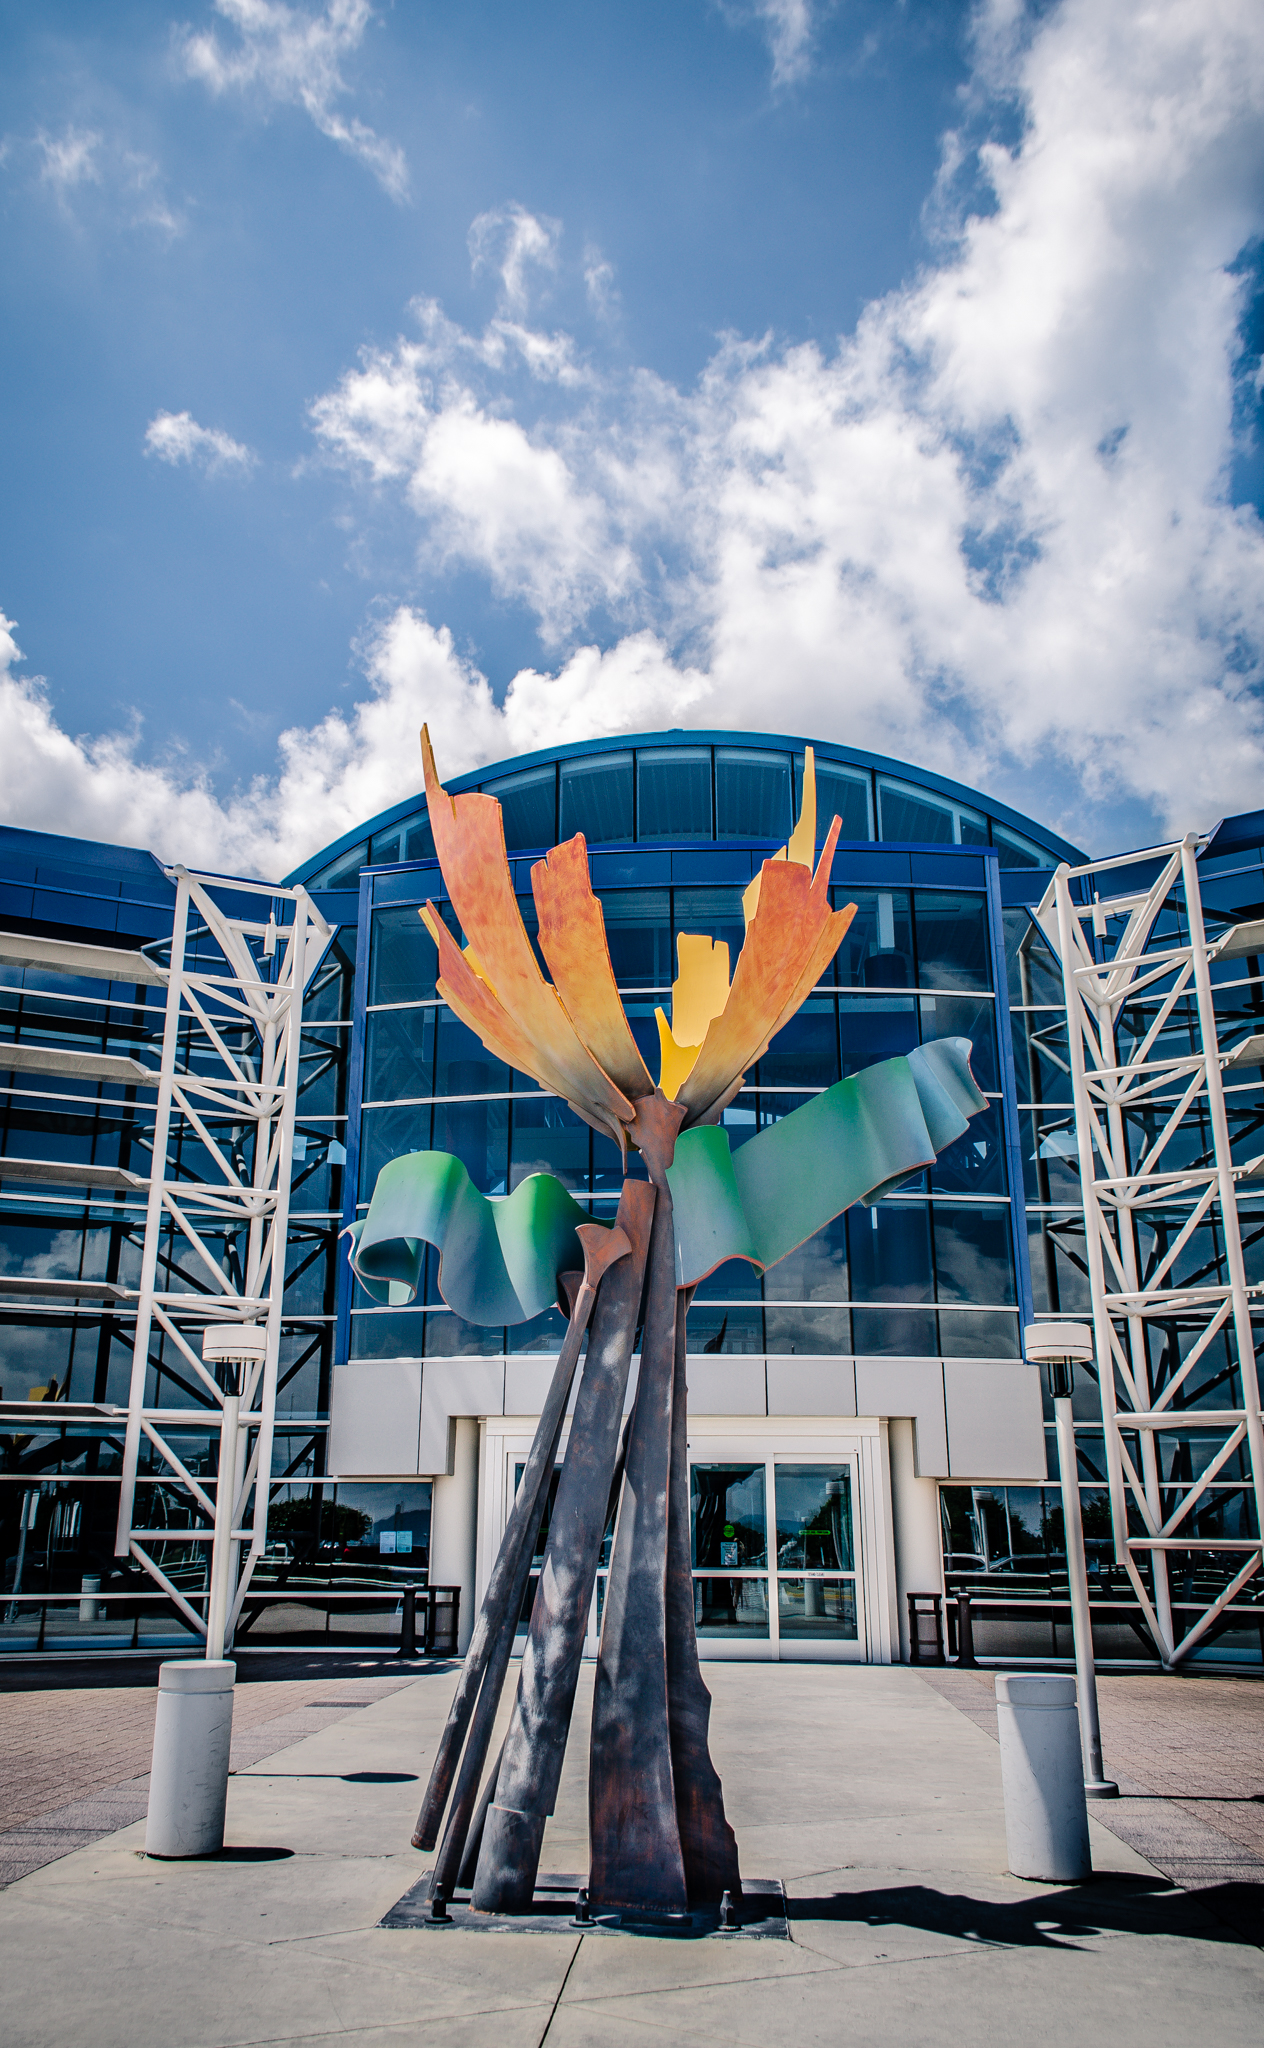 Modern art sculpture 'Aurora' in front of terminal entrance